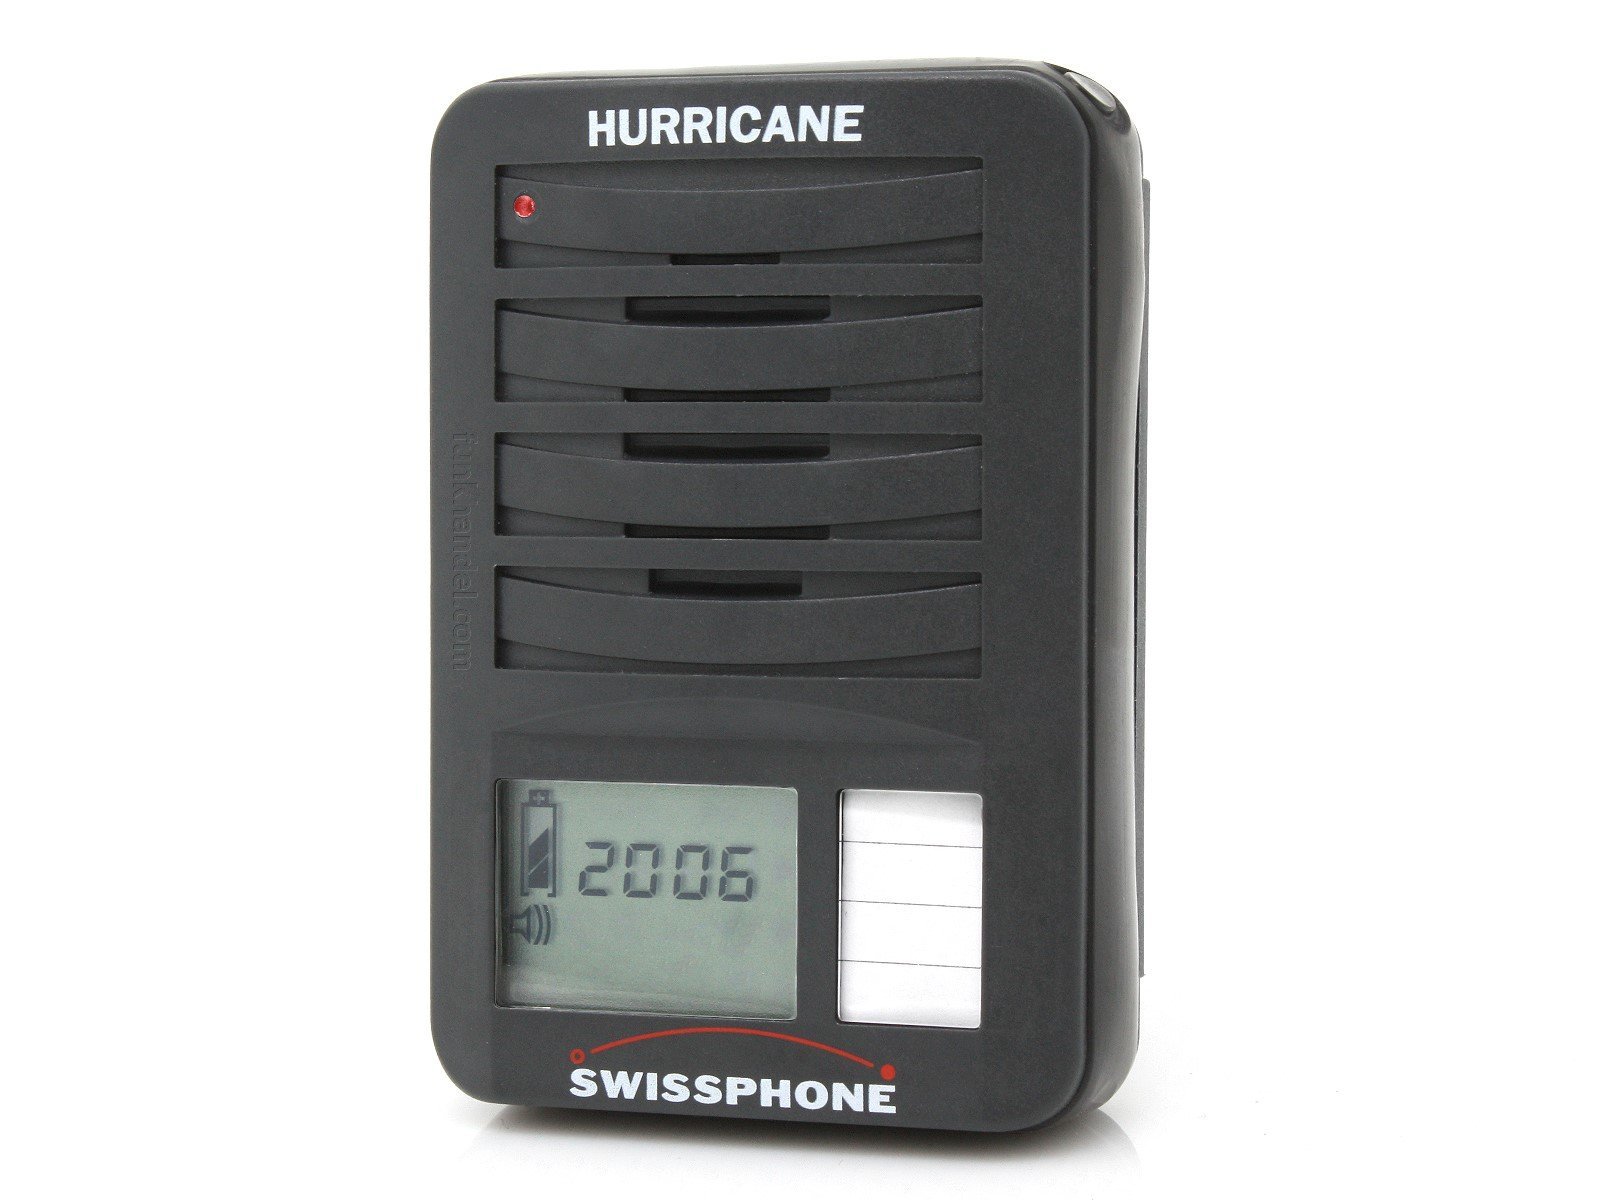 Swissphone Hurricane DV500 Voice S*